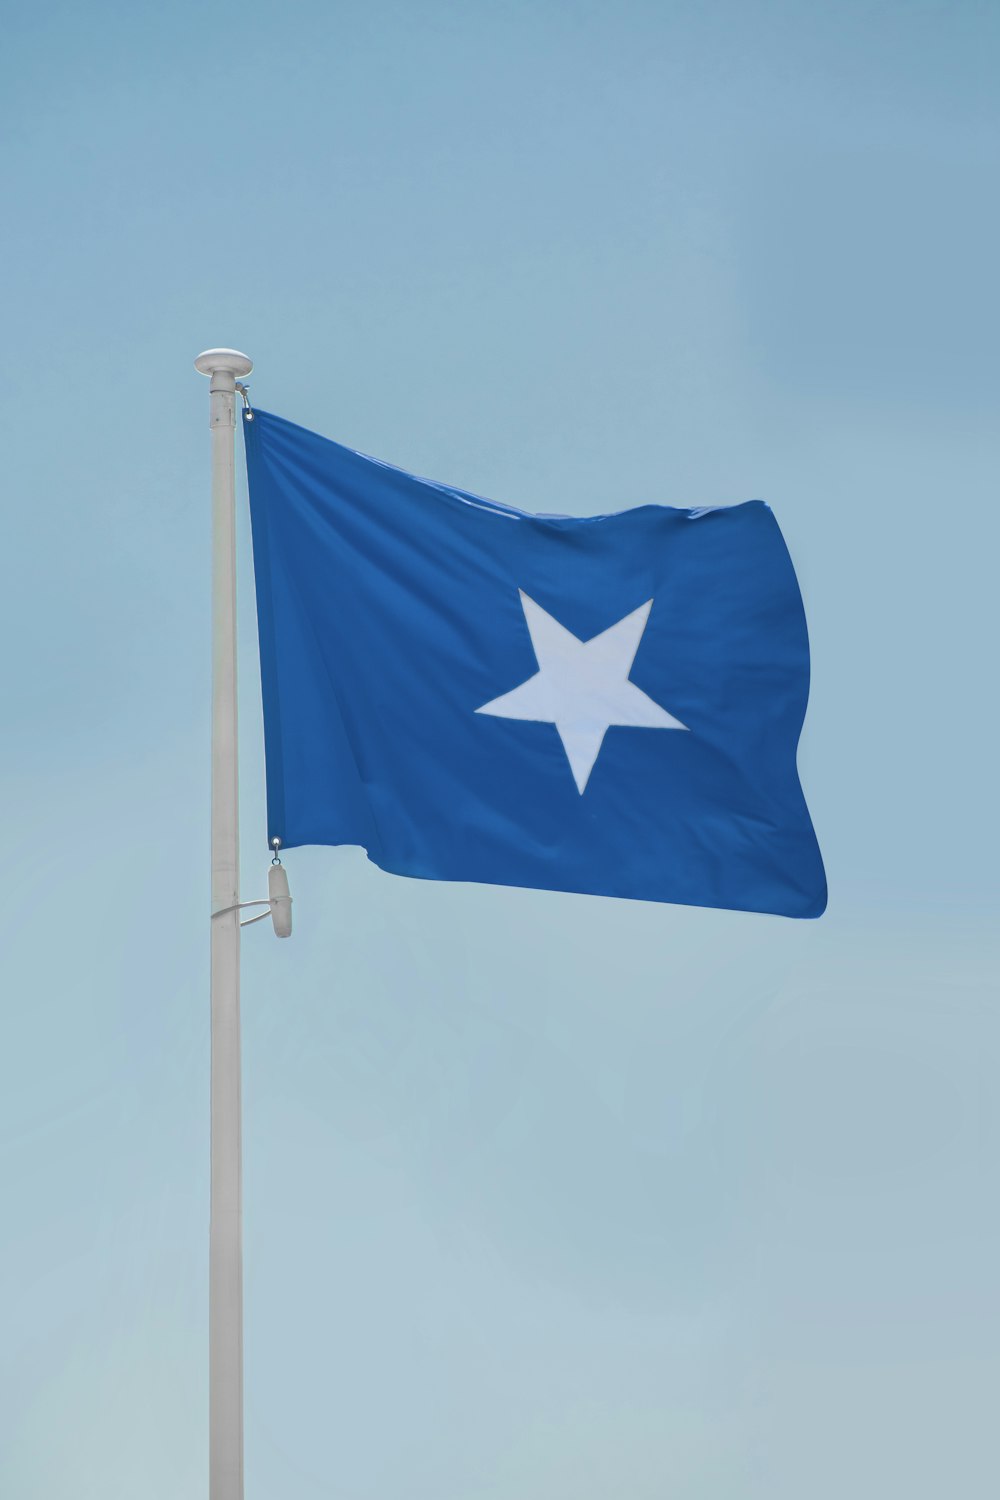 a blue flag on a pole